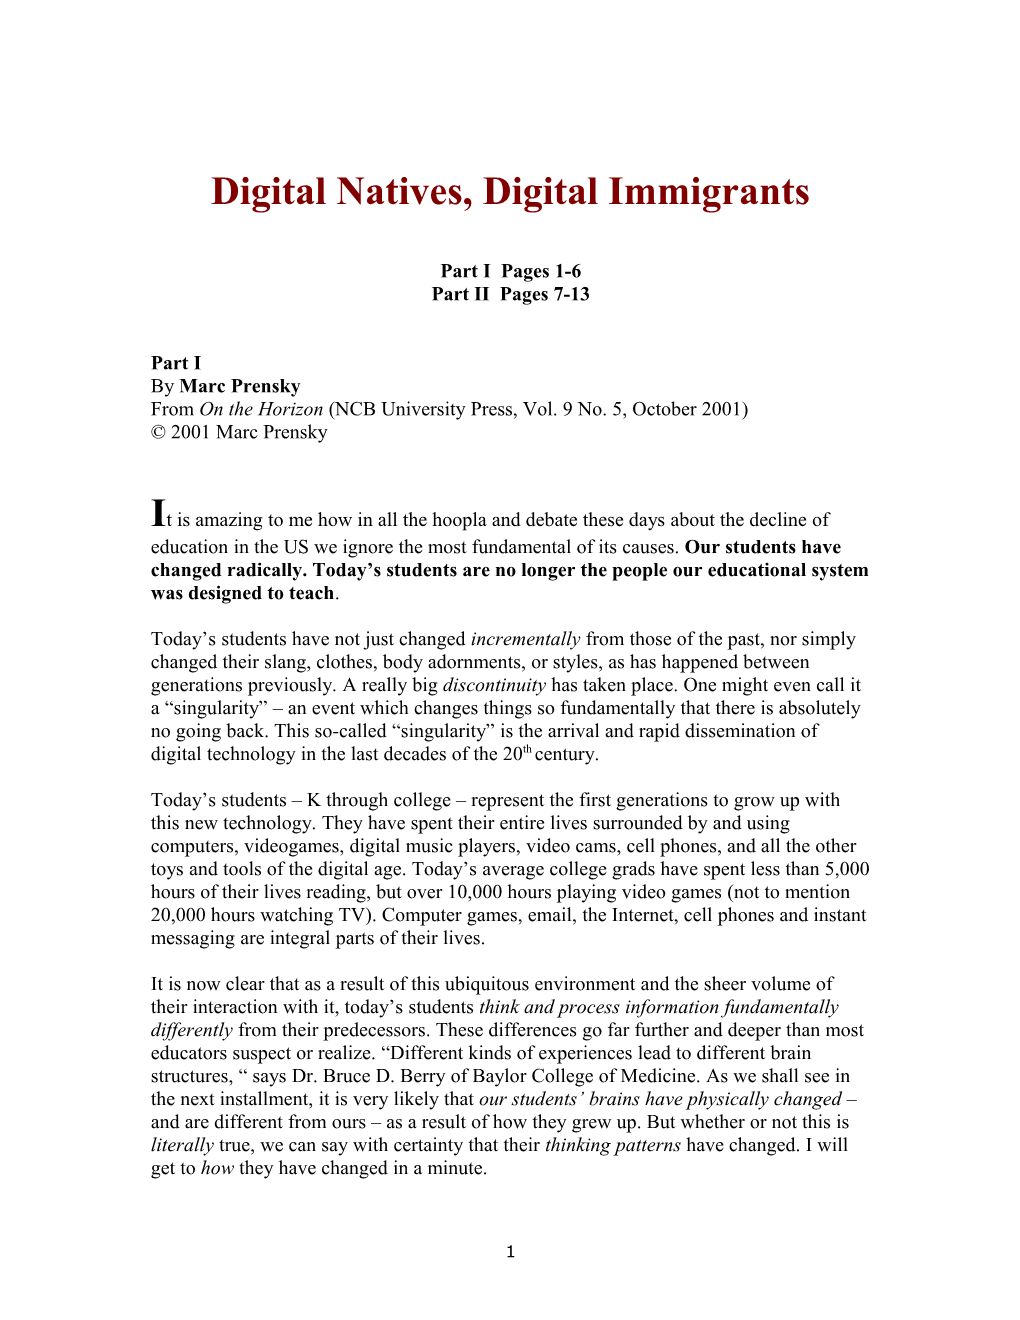 Marc Prensky Digital Natives Digital Immigrants 2001 Marc Prensky